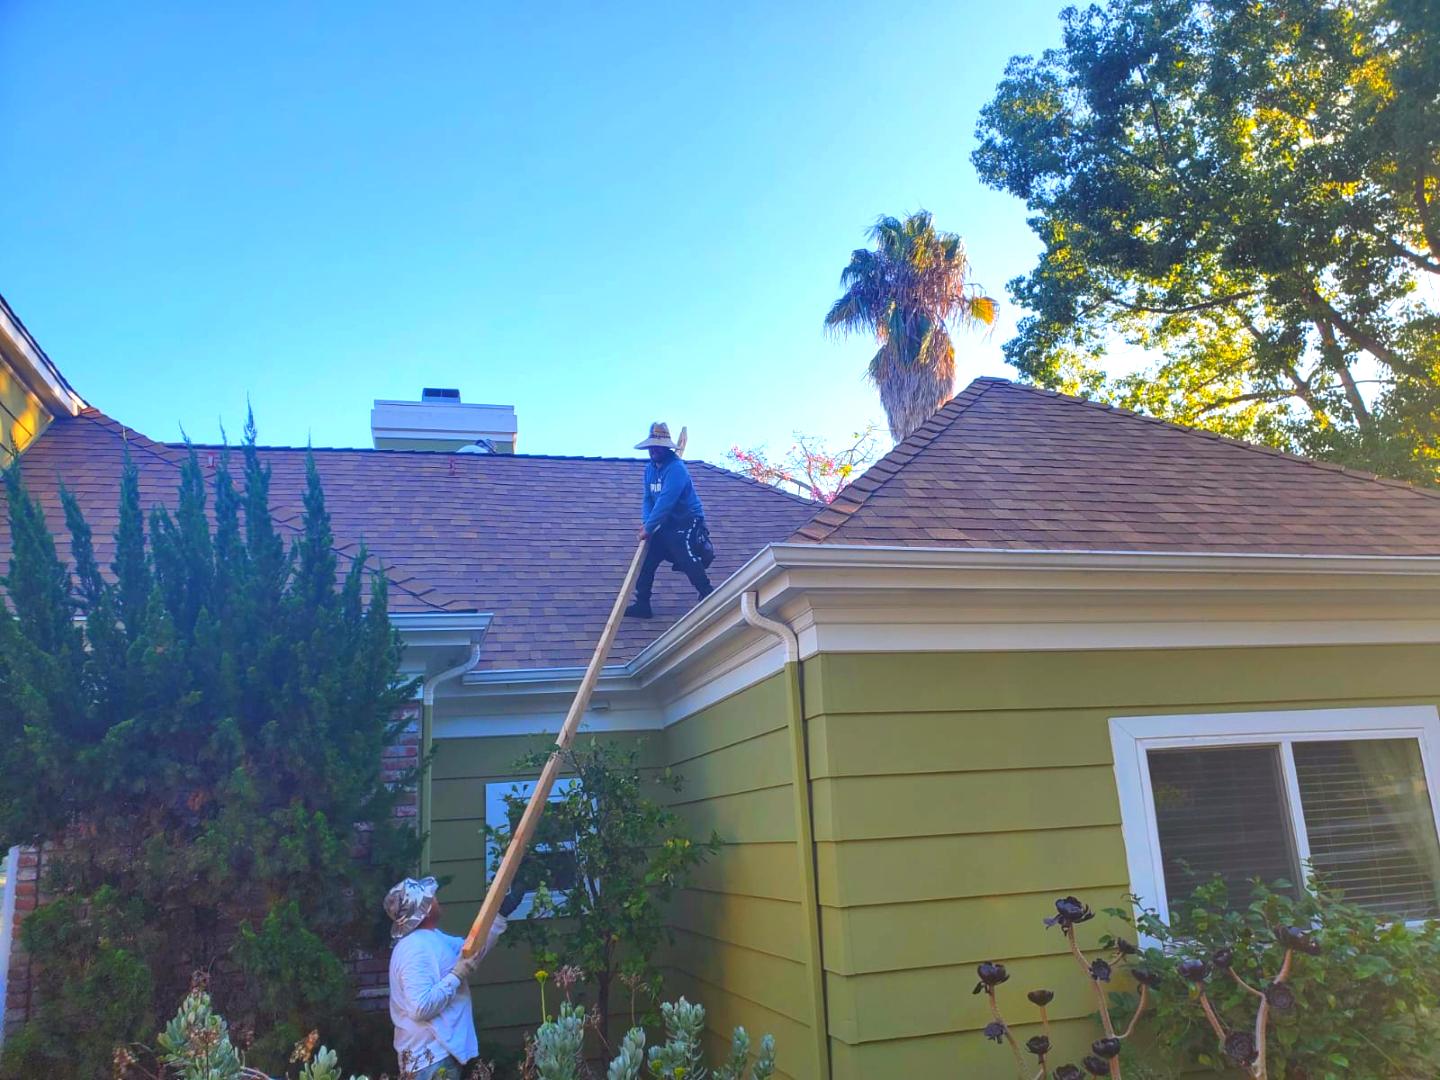 Roof Installation Project in La Mesa, CA 91941